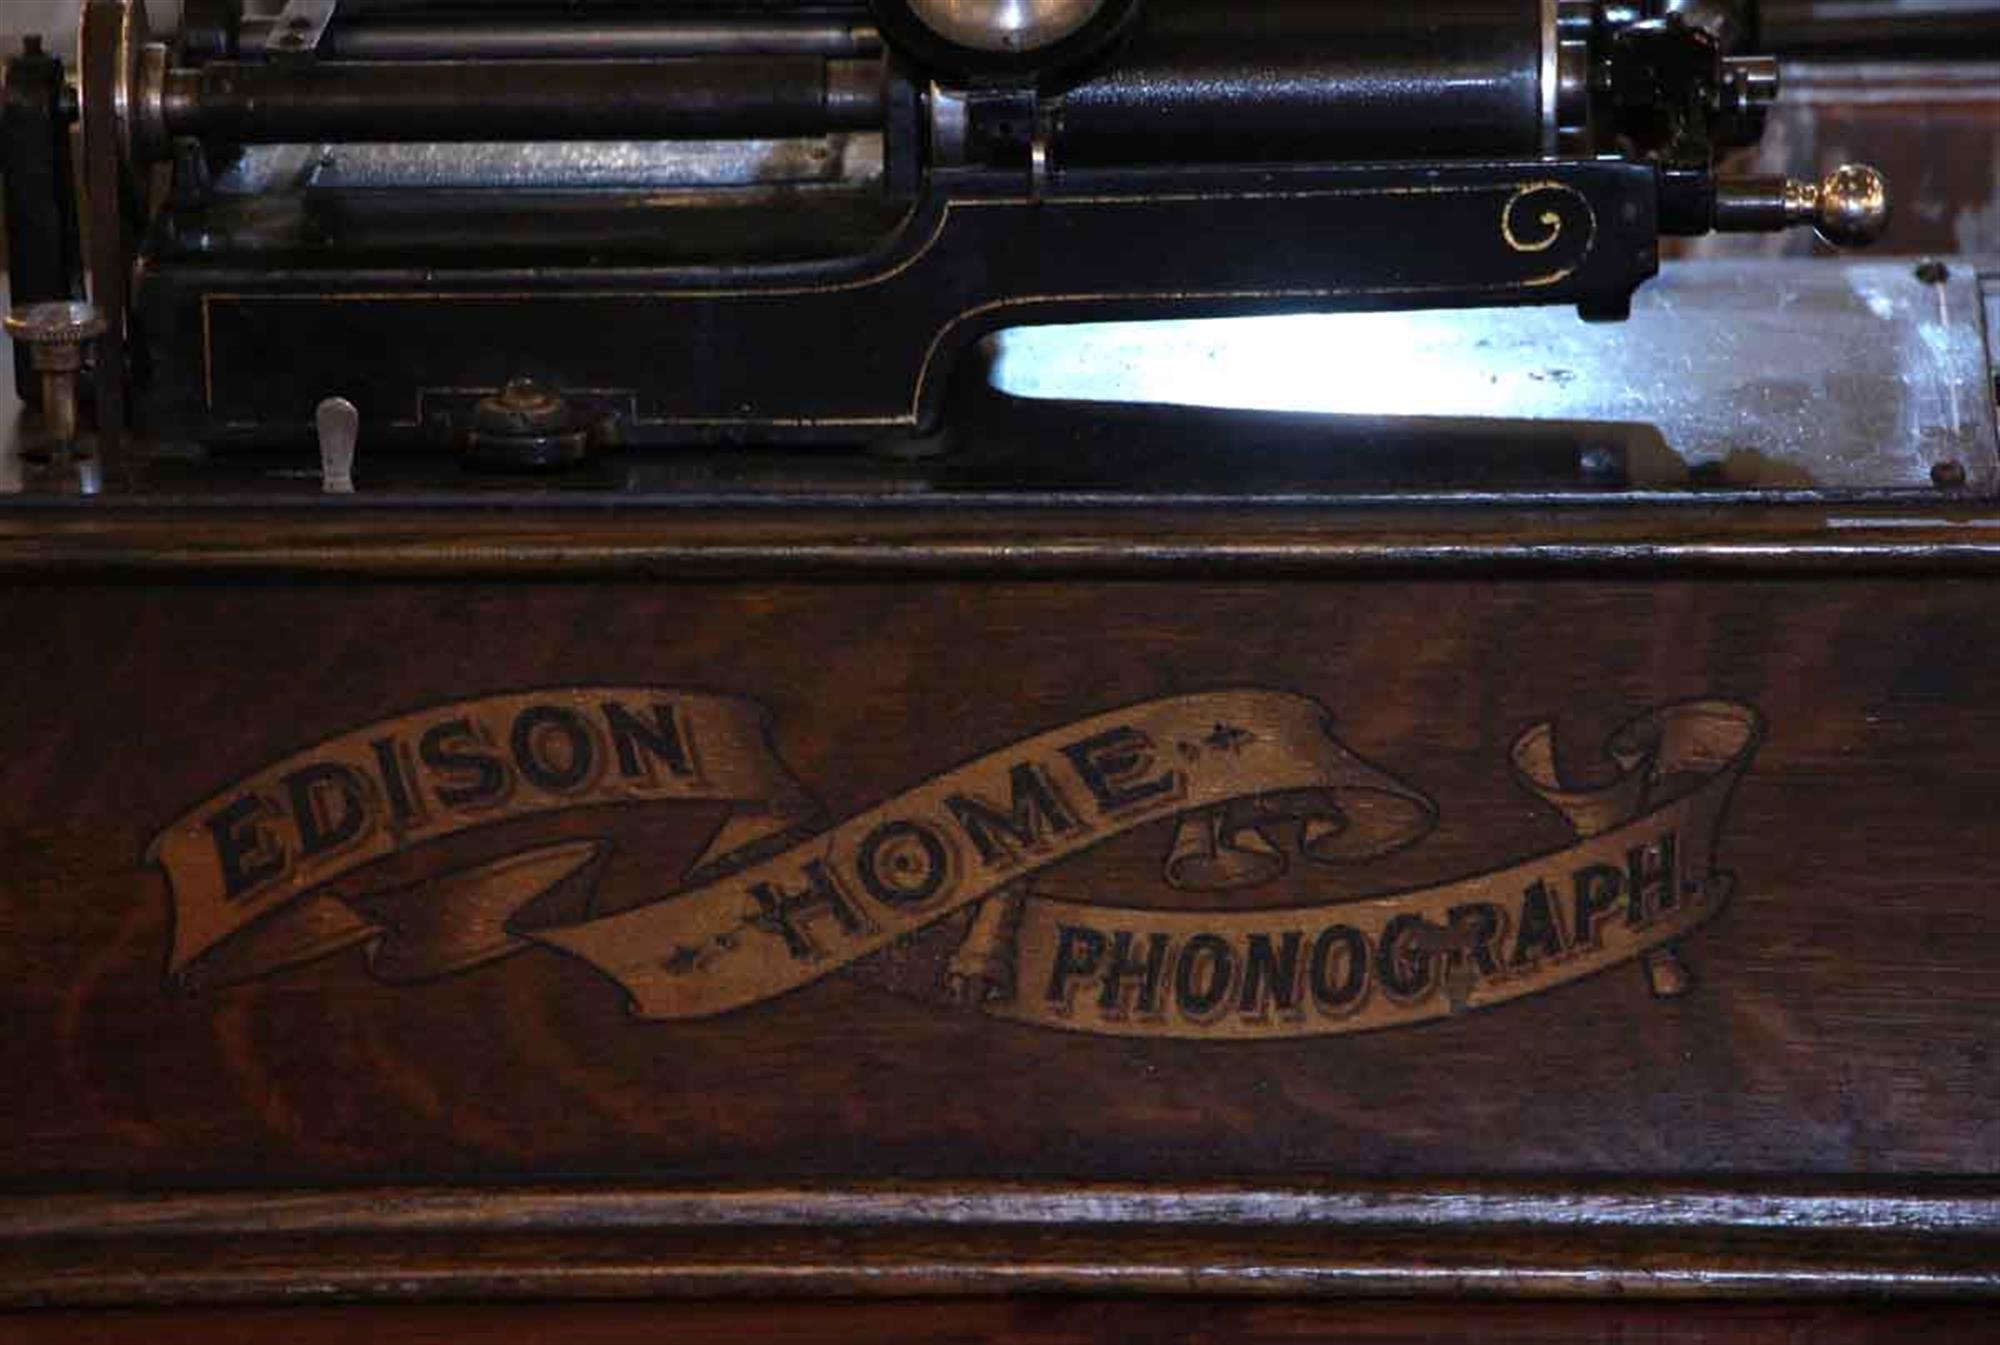 edison home phonograph